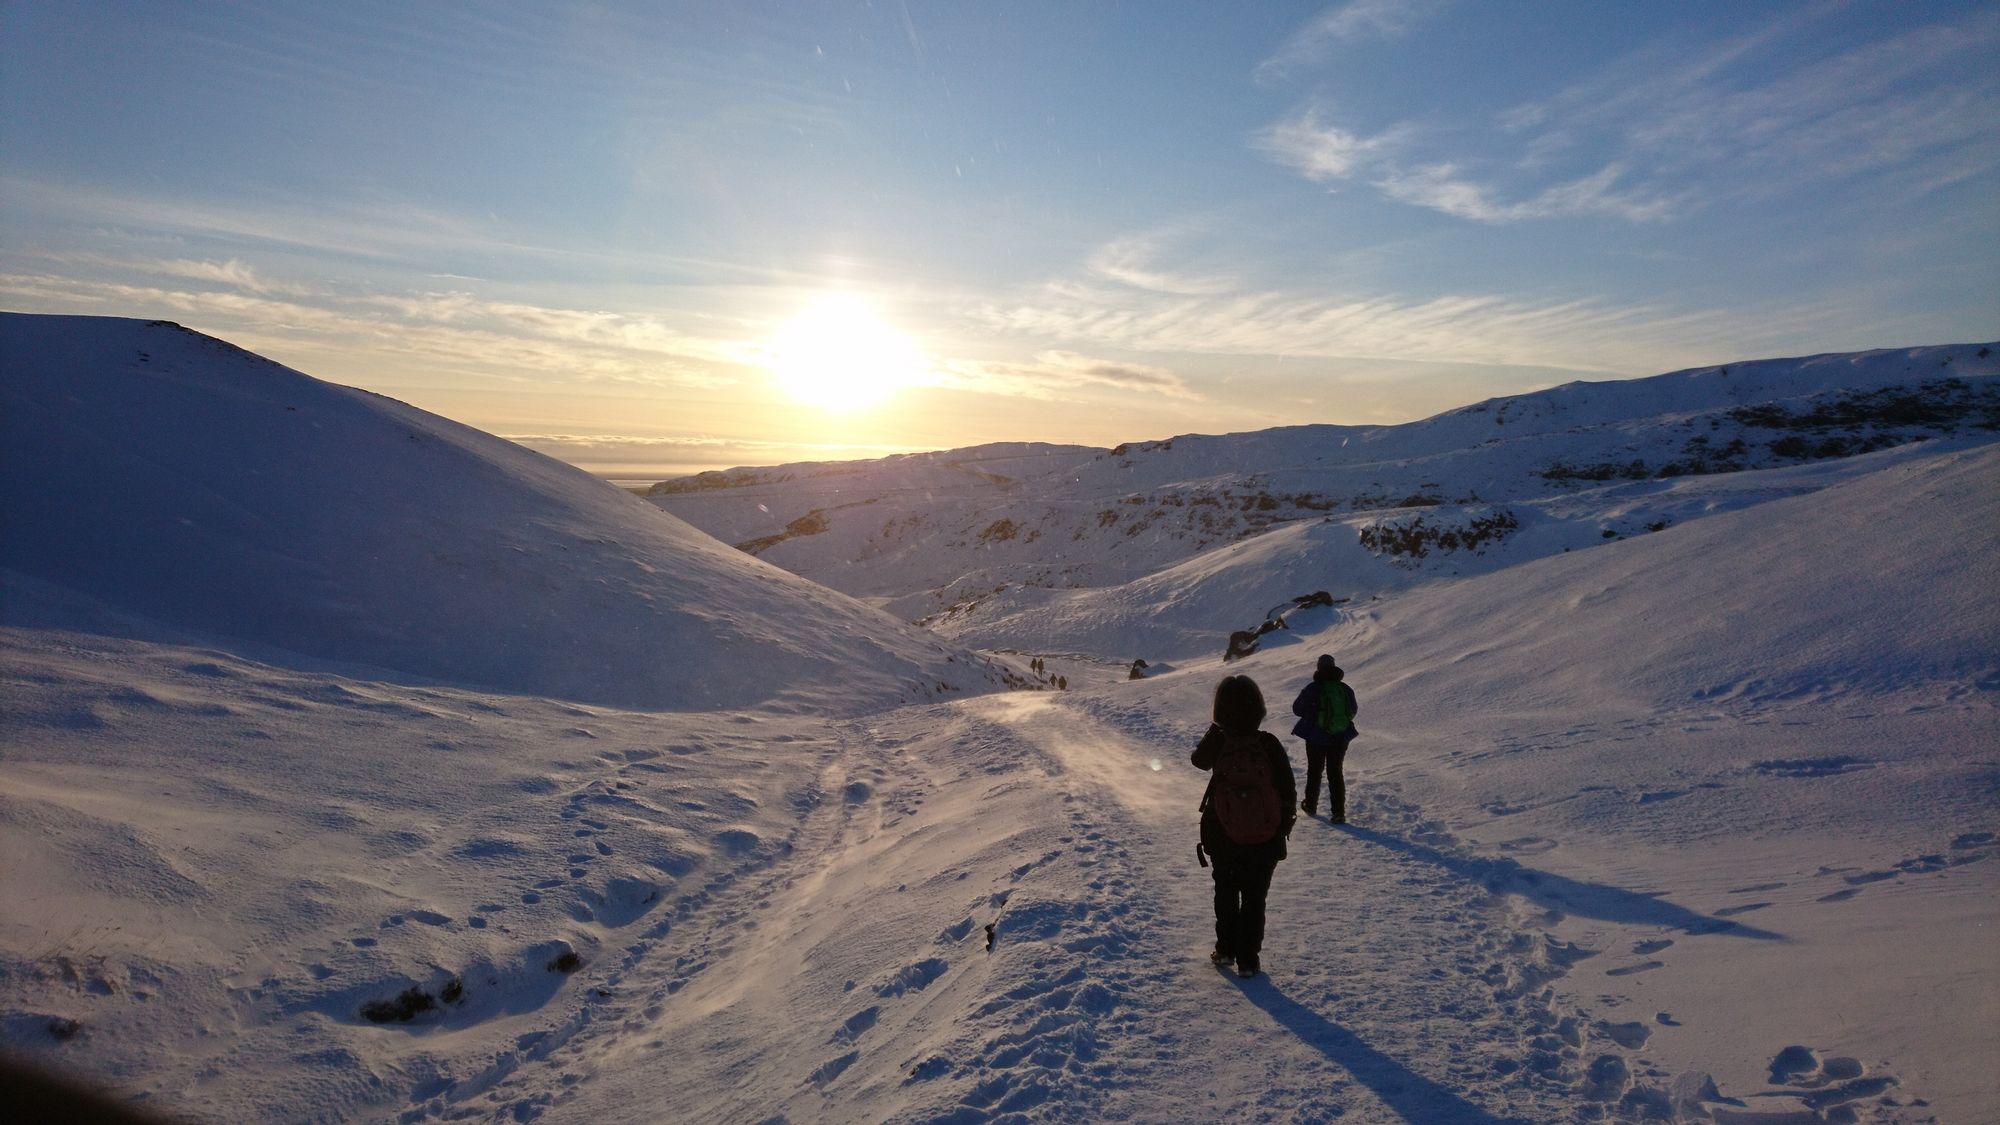 Where the Continents Meet | A ‘Walk’ Through Iceland’s South Coast